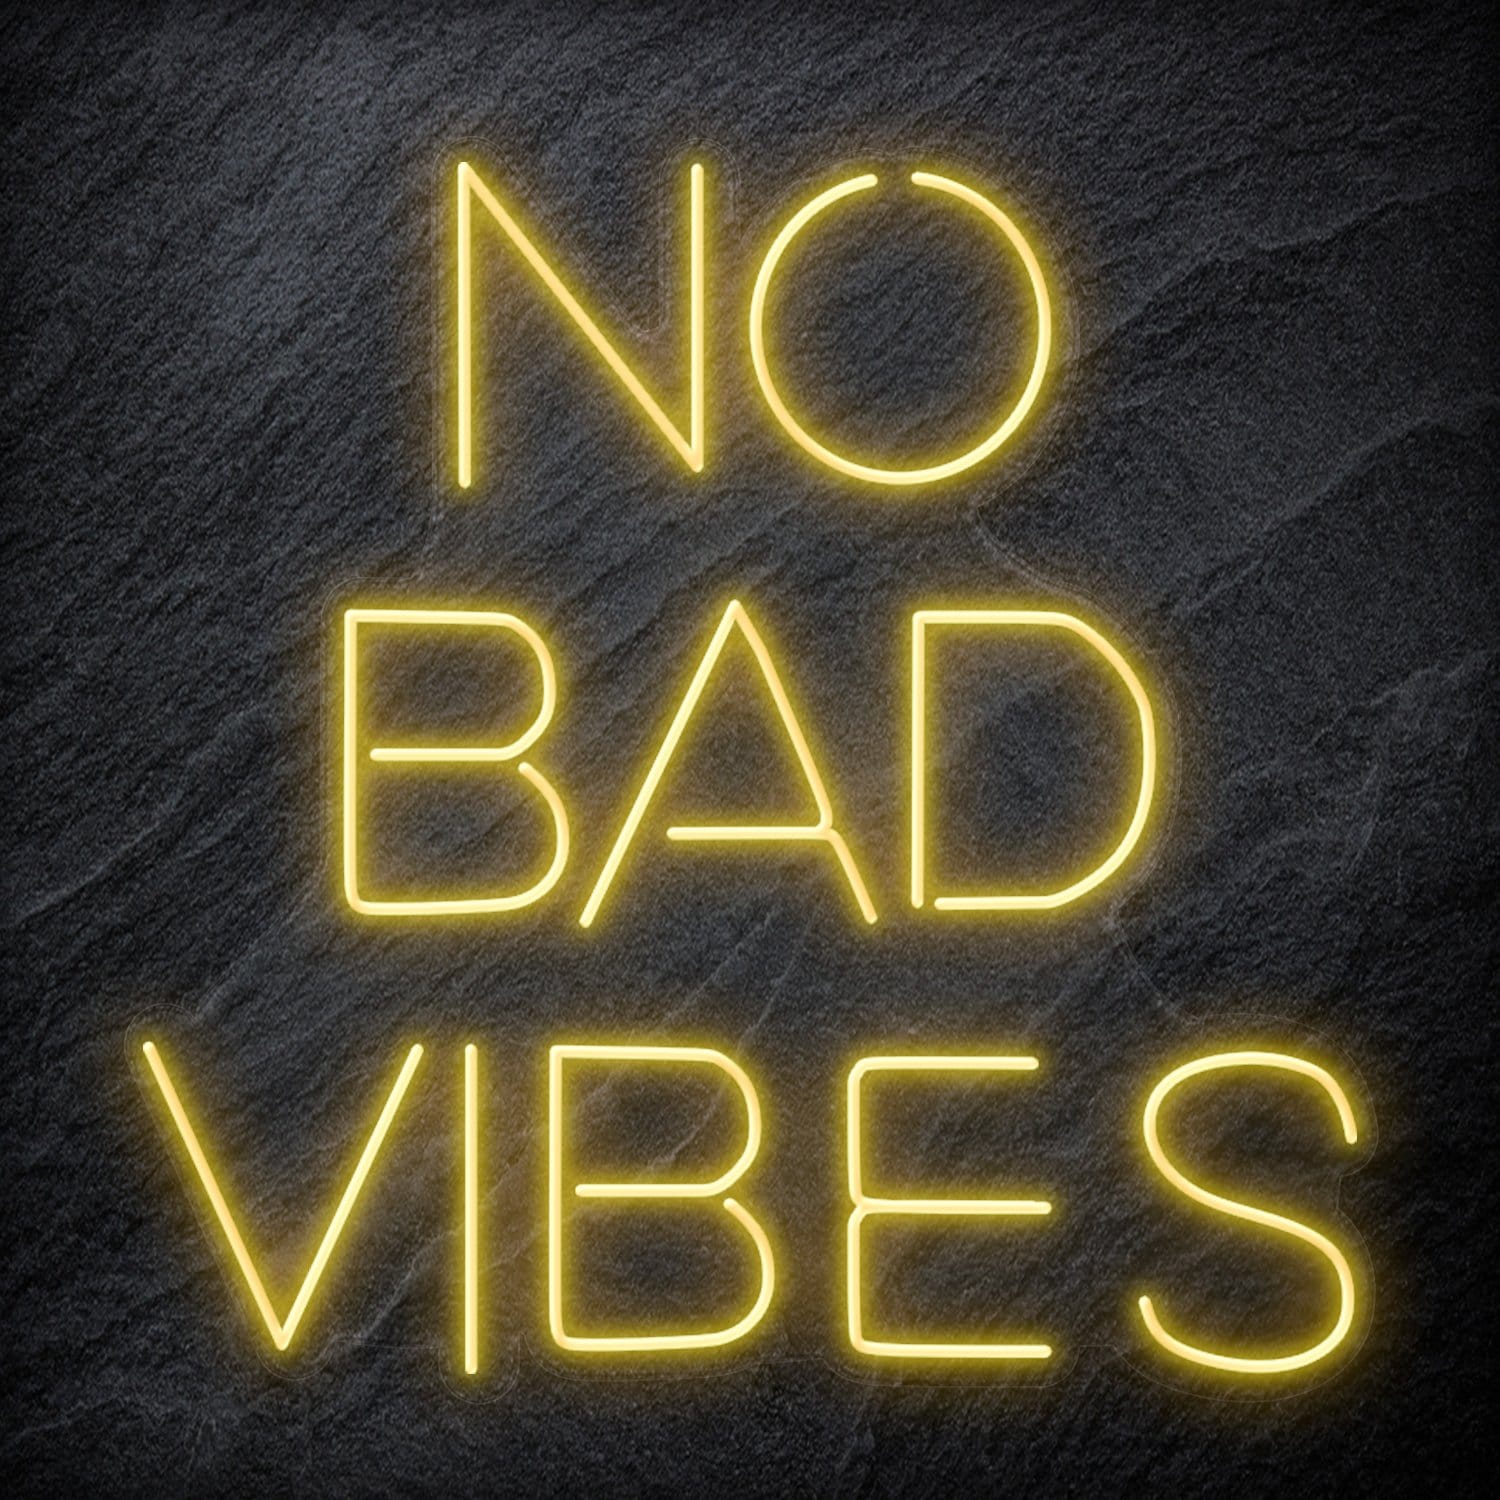 "No Bad Vibes" LED Neon Schriftzug Sign - NEONEVERGLOW